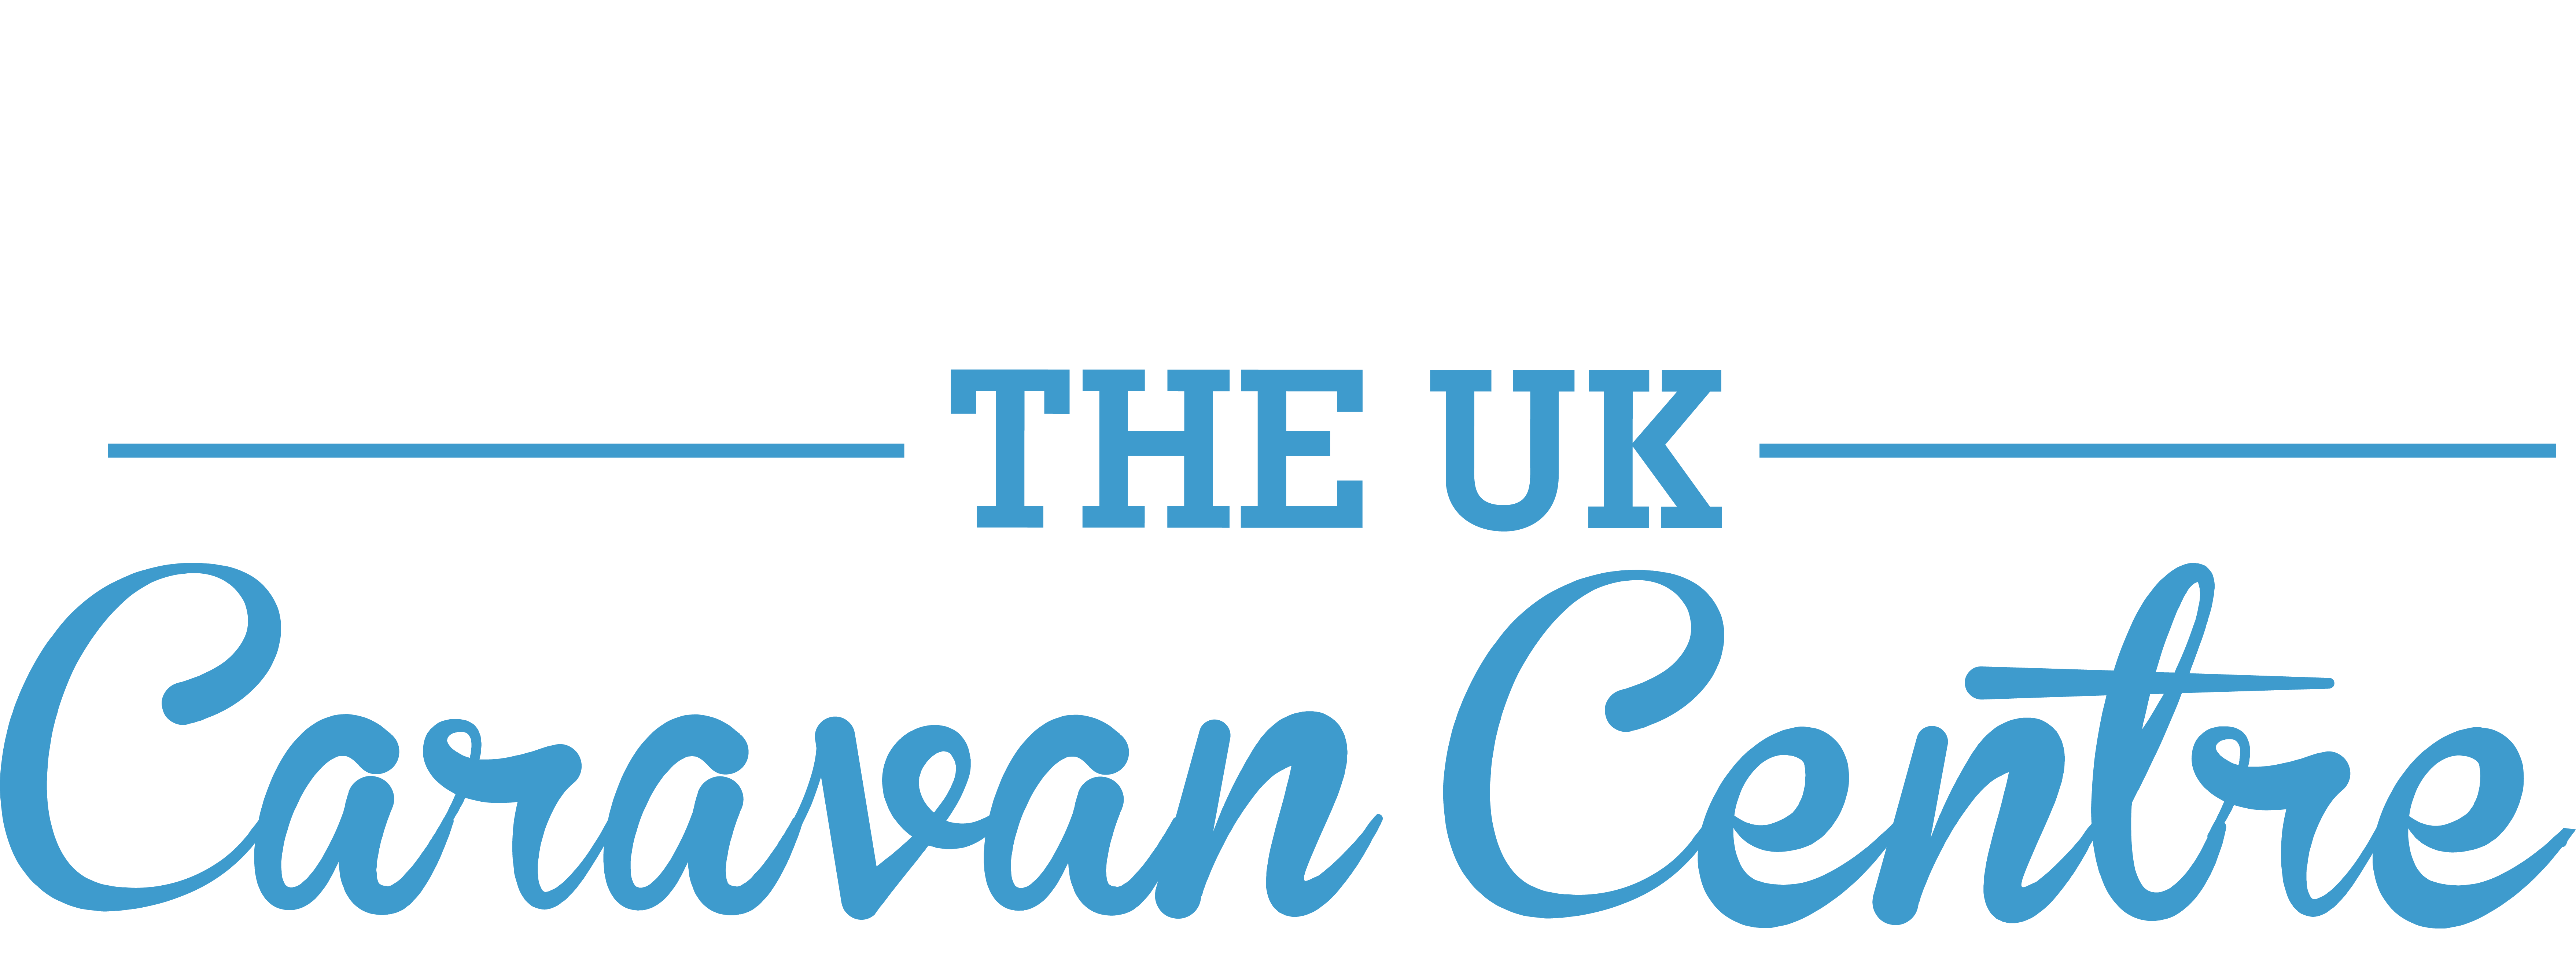 UK Caravan Centre logo